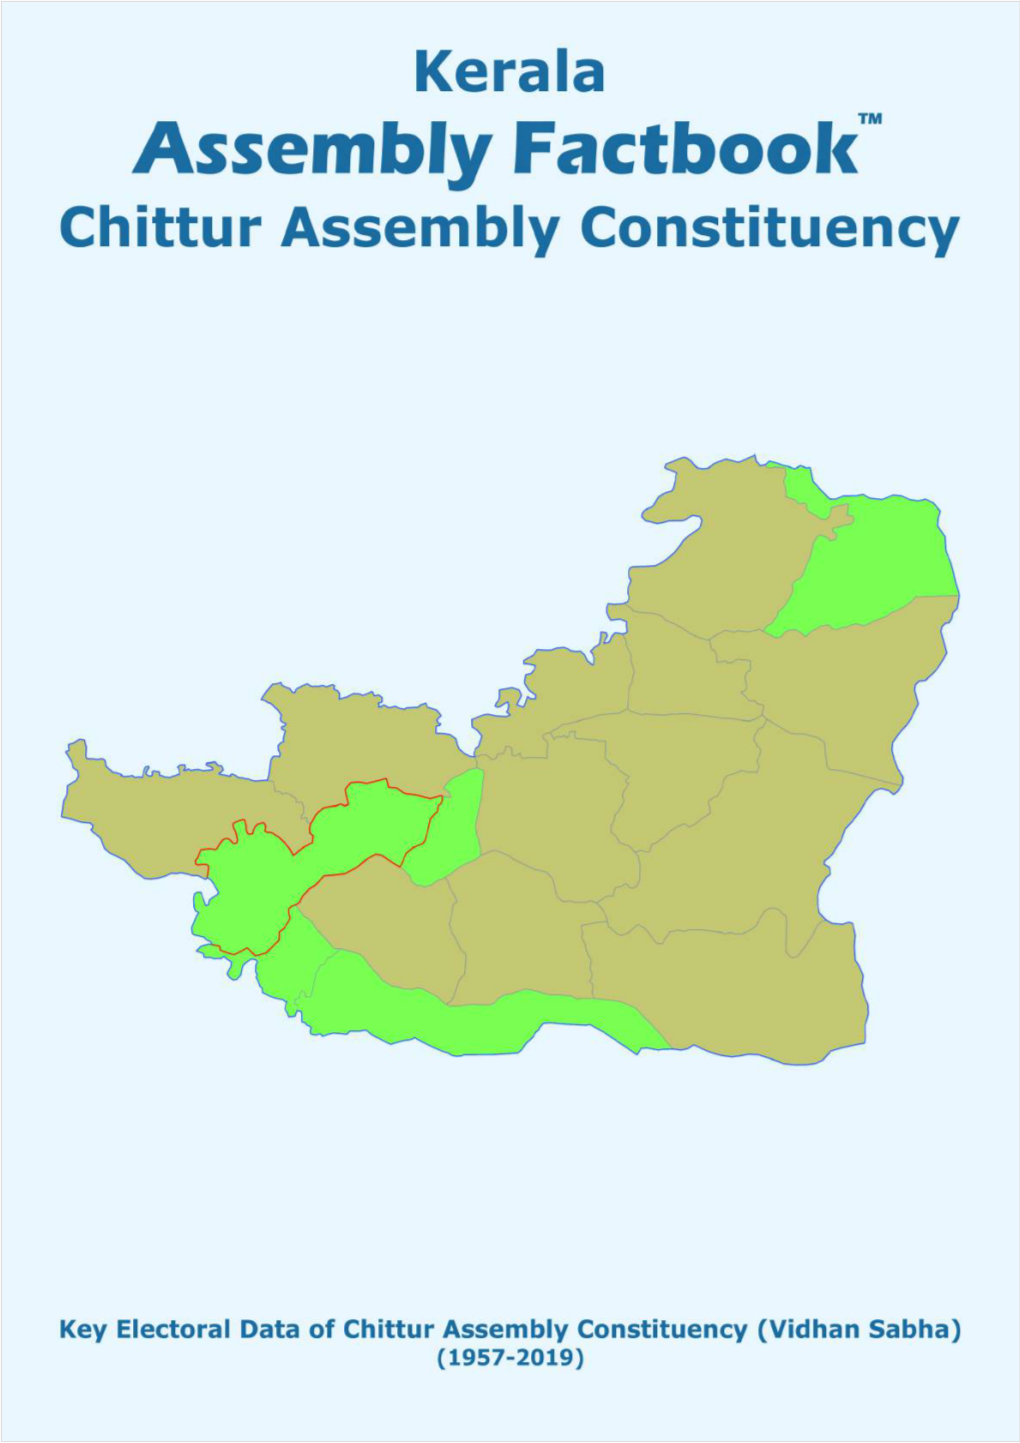 Chittur Assembly Kerala Factbook